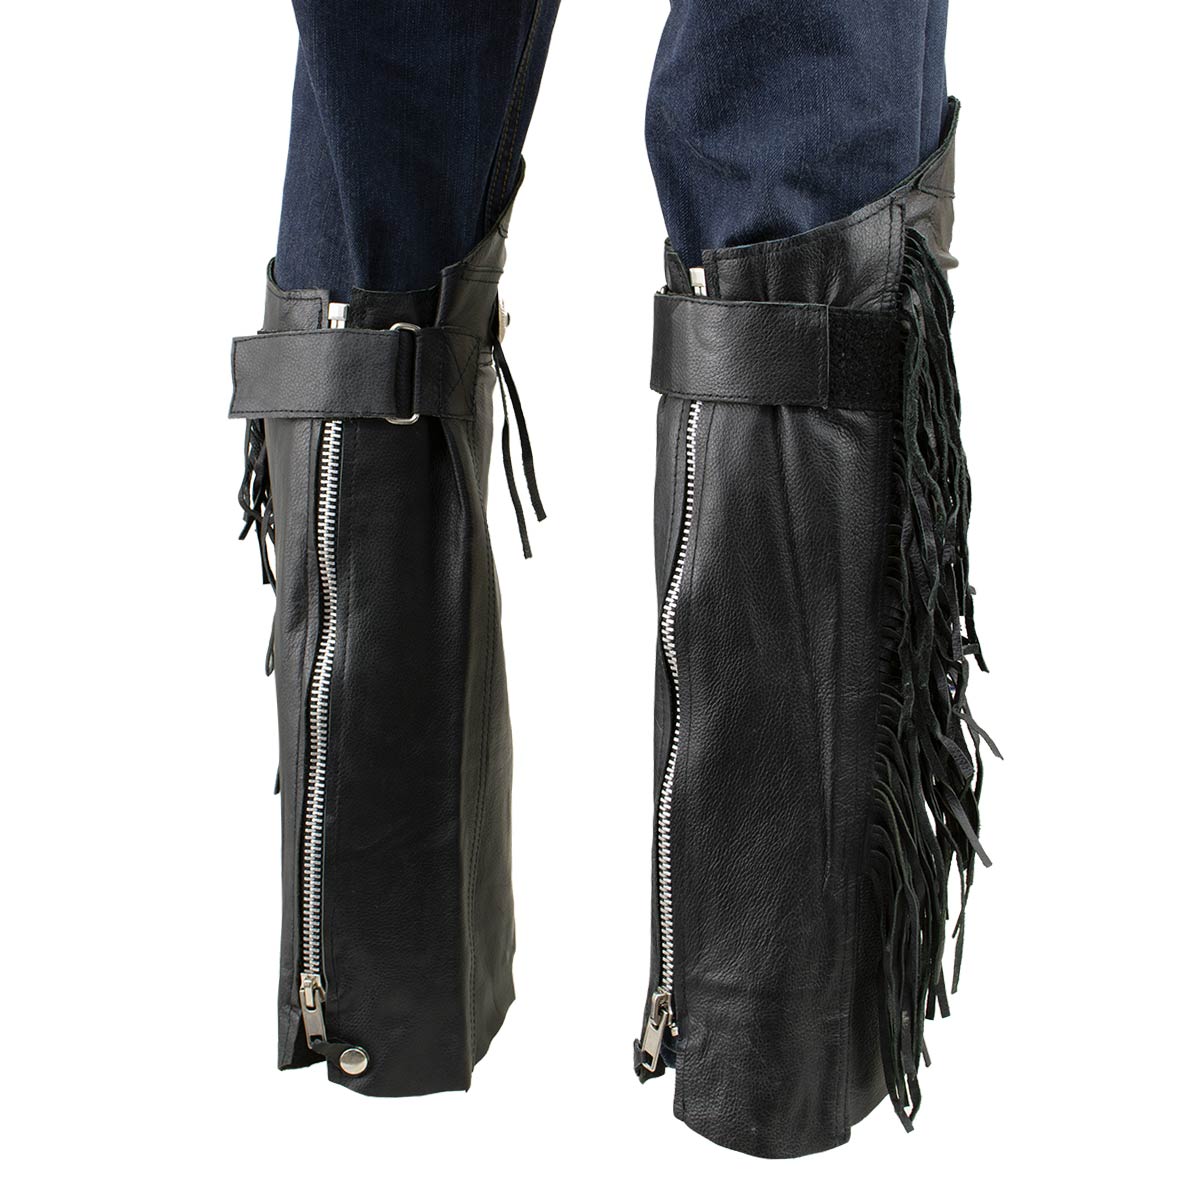 Genuine Leather SH1199FR Women's Black ‘Fringed’ Leather Short Chaps with Conchos with Conchos